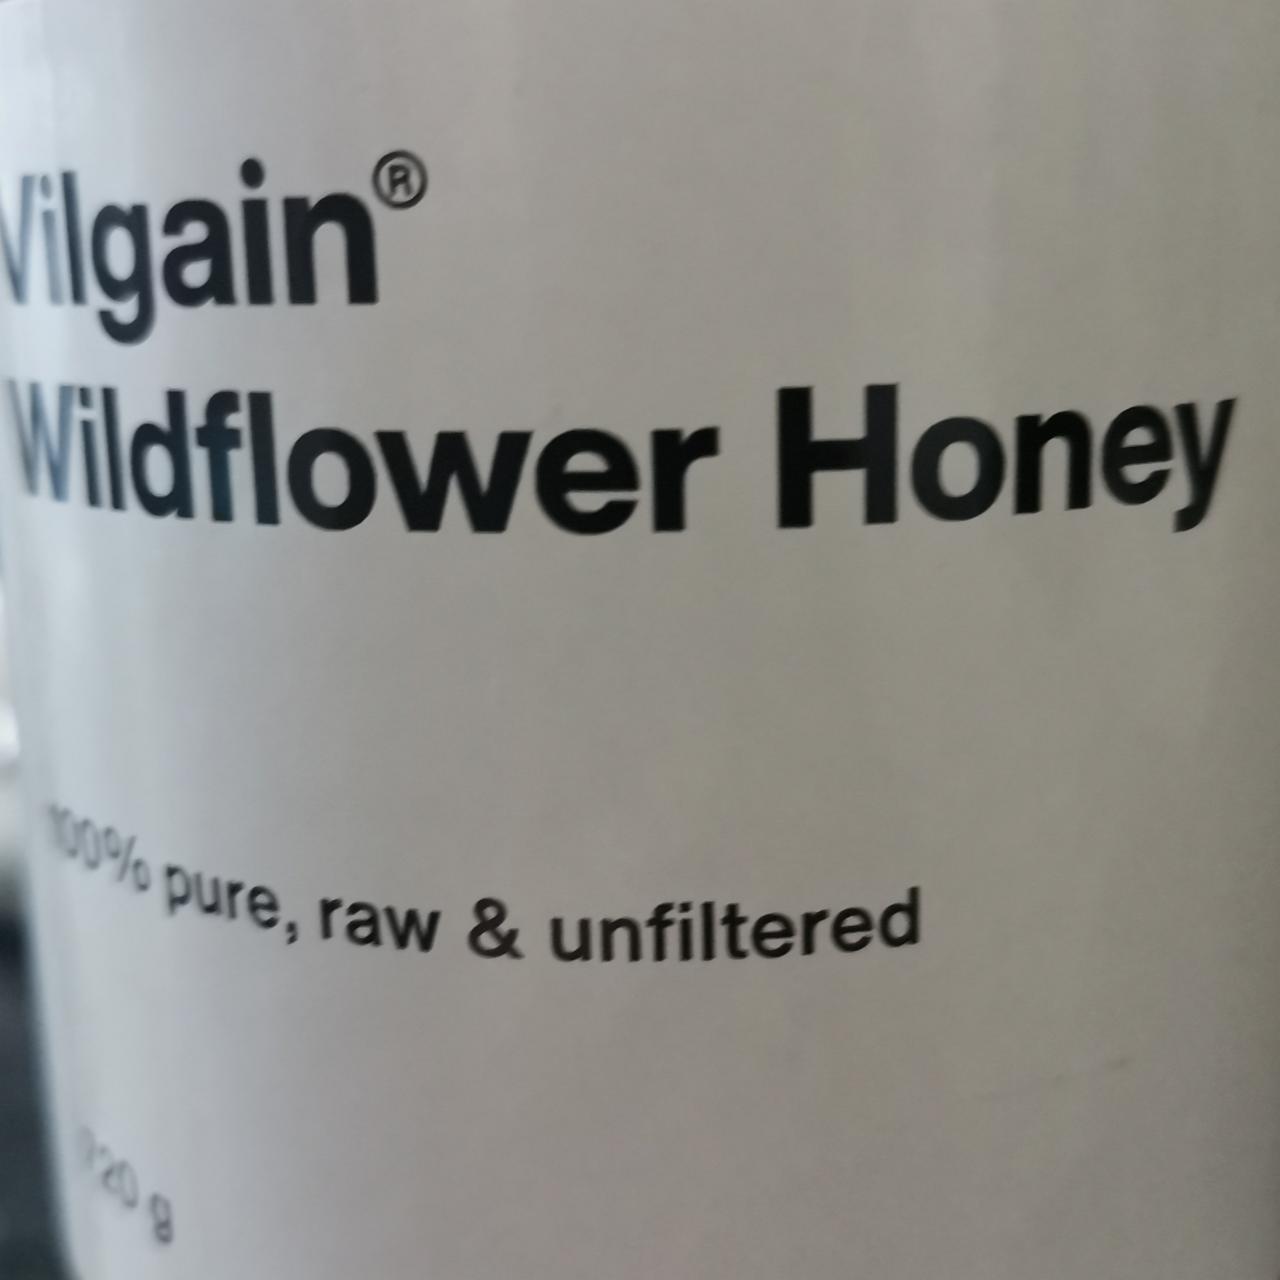 Fotografie - Wildflower Honey Vilgain